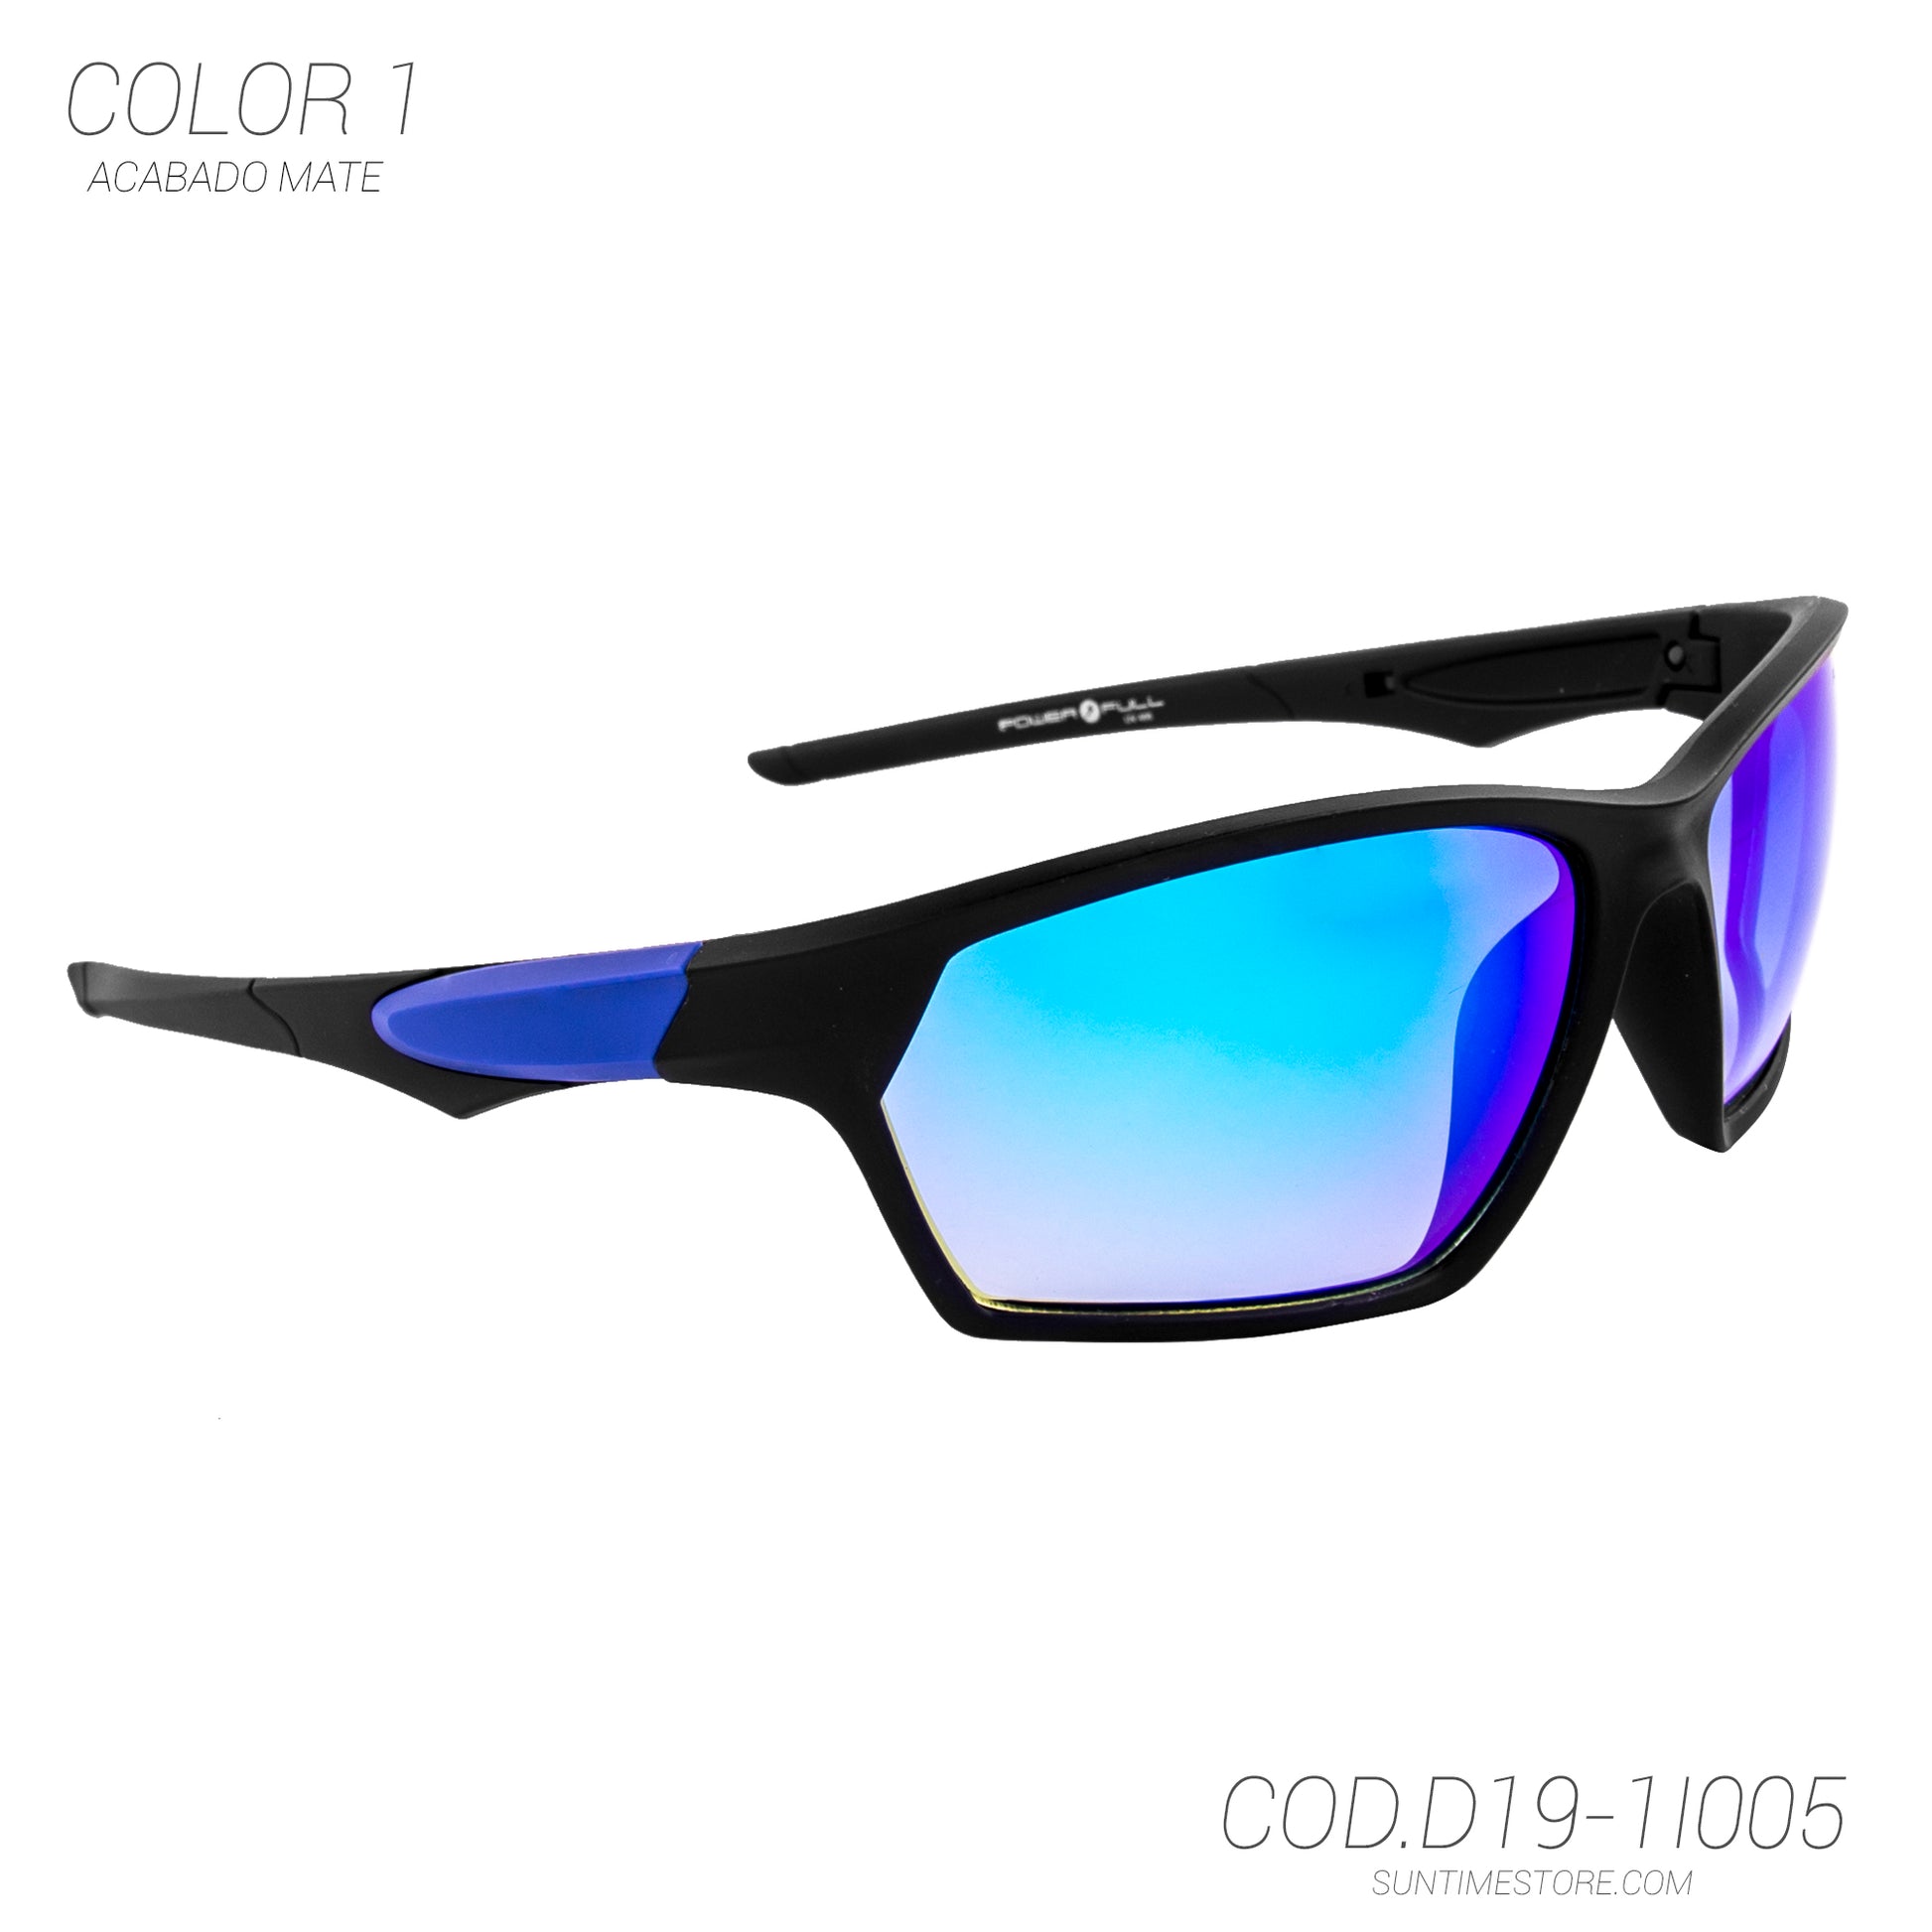 Gafas De Sol Hombre Polarizadas Filtro Uv400 Kit Completo